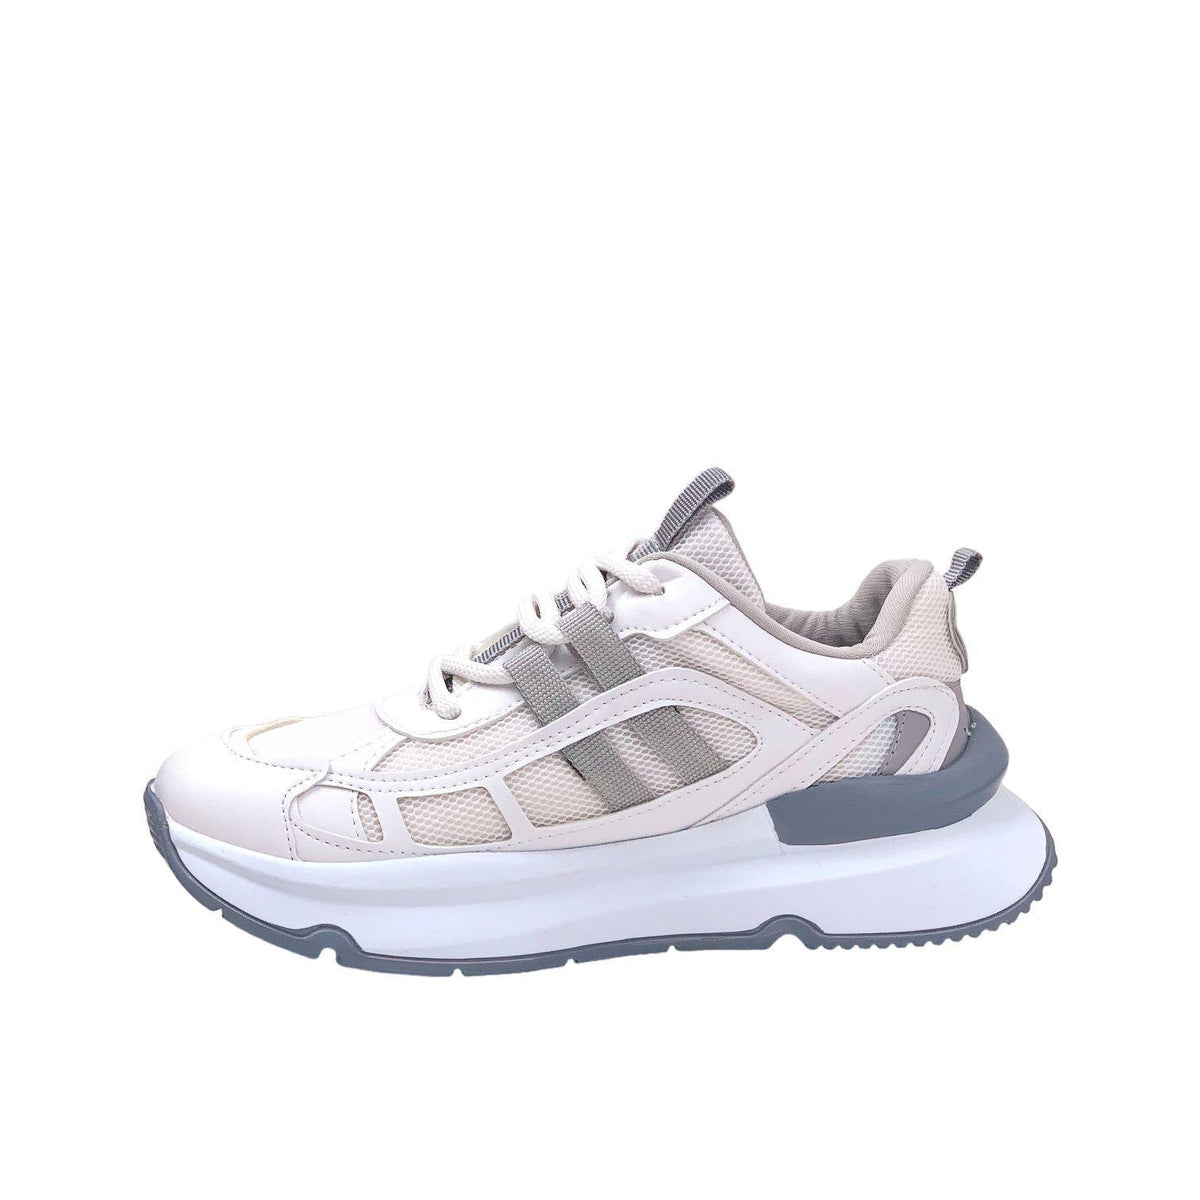 Women's Osda White Gray Casual Sports Shoes Sneaker 4 cm - STREETMODE ™